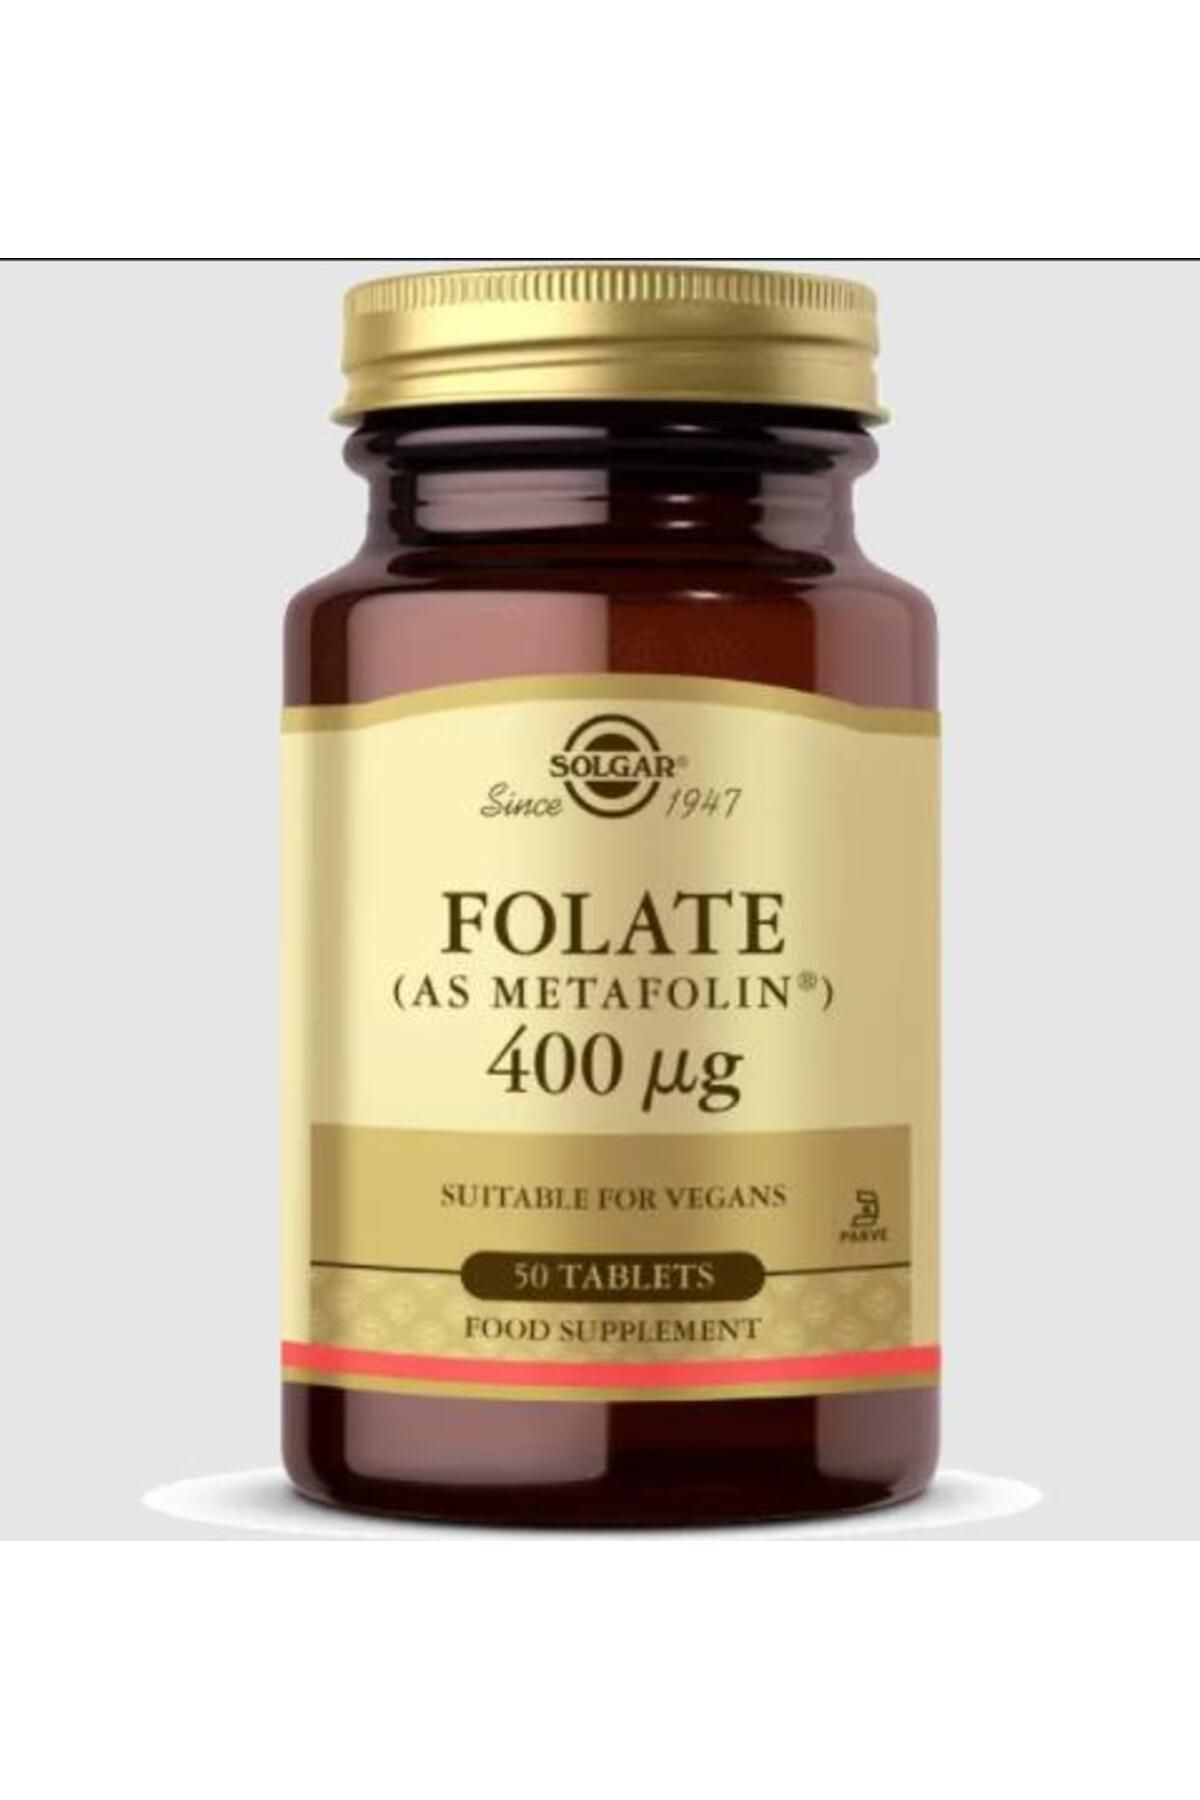 Solgar Folate (METAFOLİN) 400 Mcg 50 Tablet